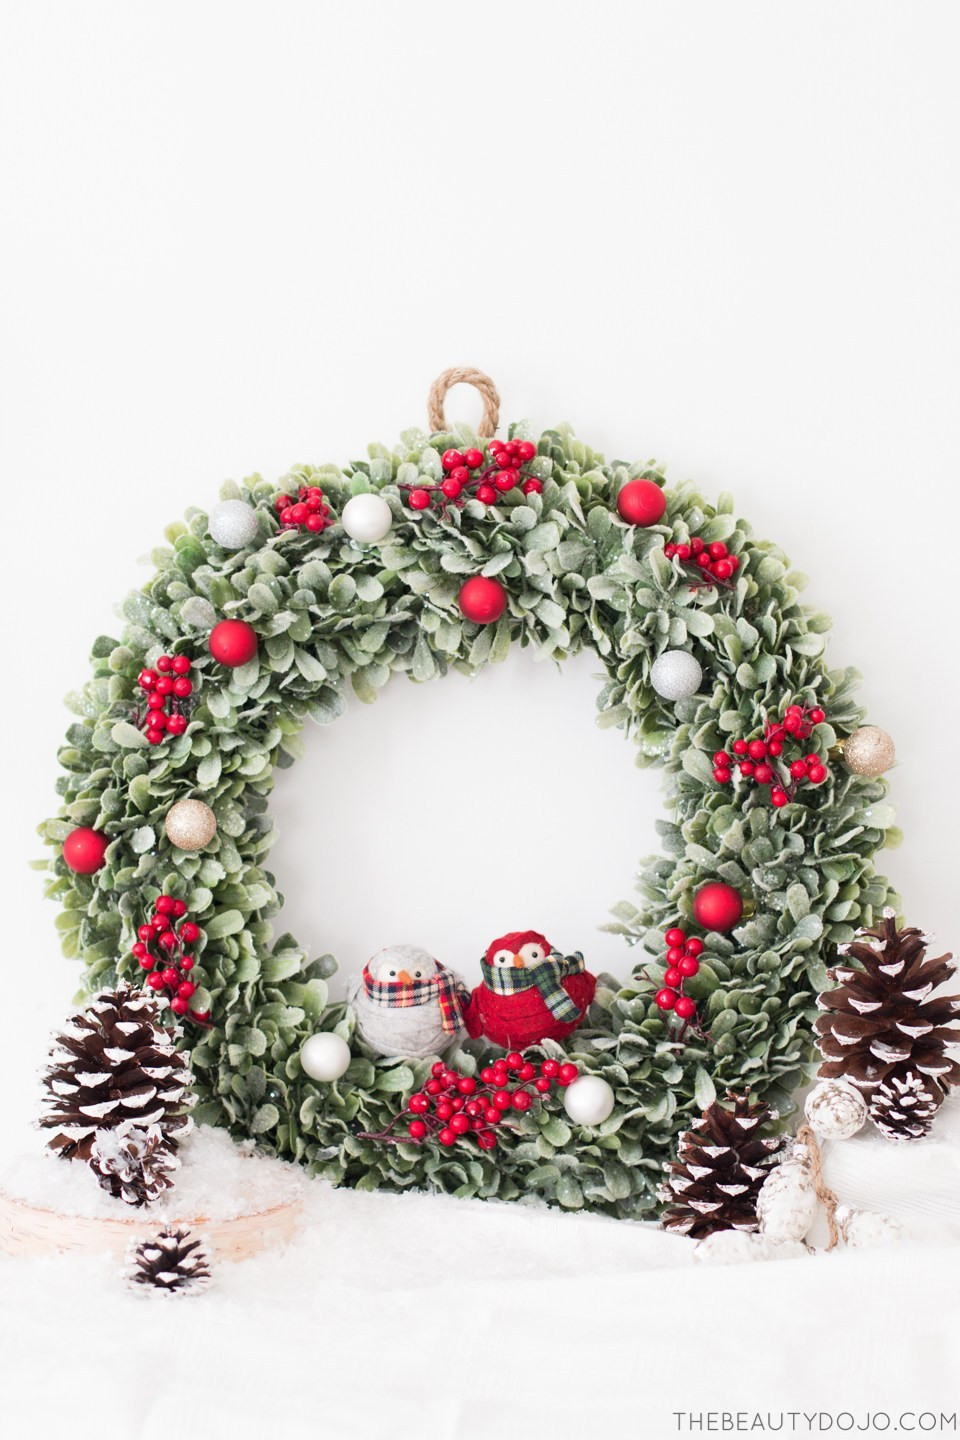 Best ideas about DIY Christmas Wreath
. Save or Pin DIY Christmas Wreath The Beautydojo Now.